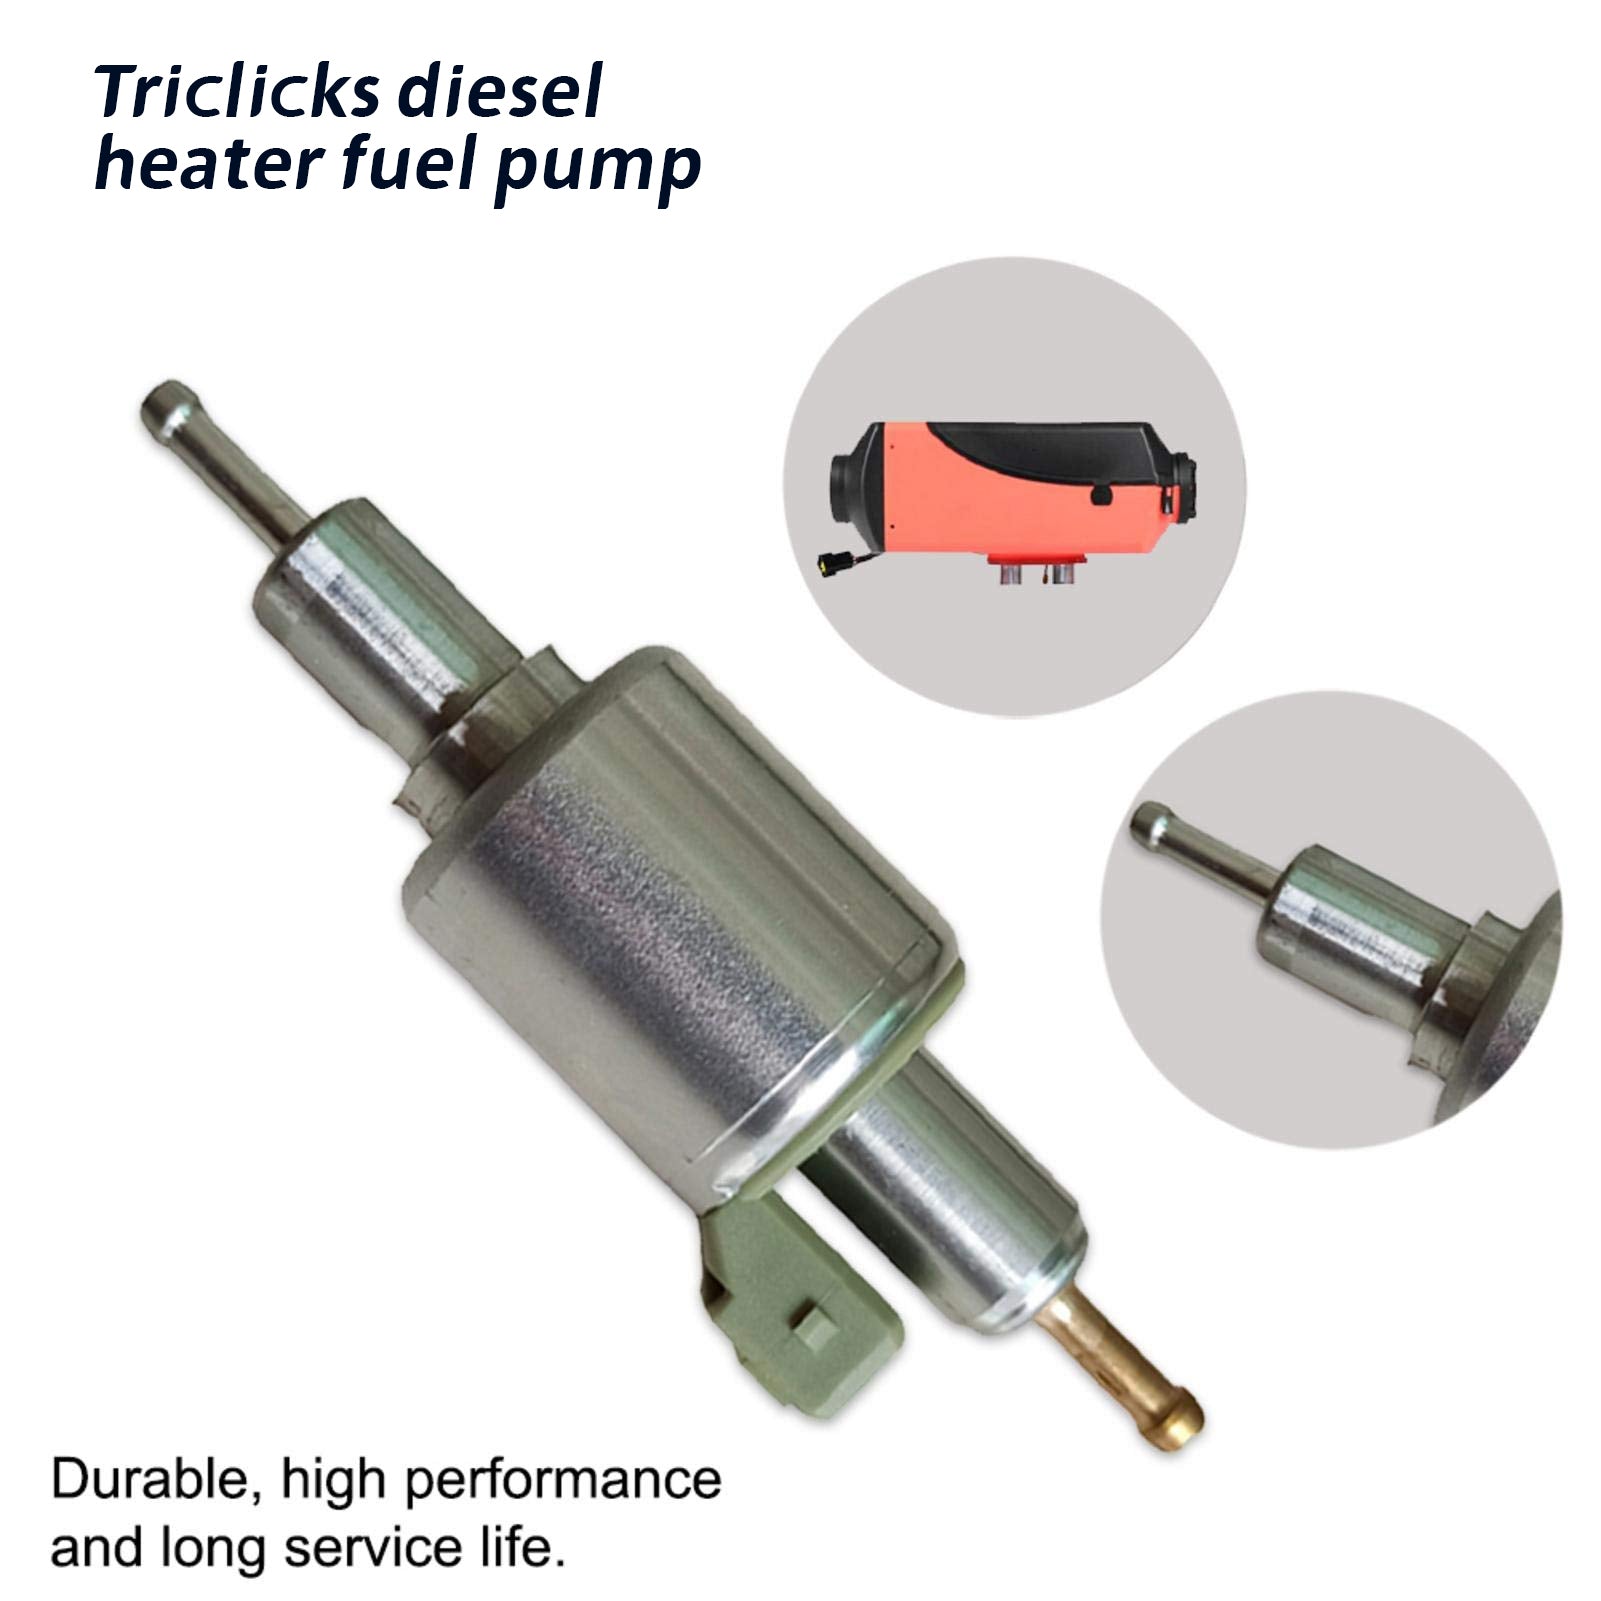 Triclicks Electric Fuel Pumps Air Heater Diesel Pump Accessories for Truck Diesel Heater